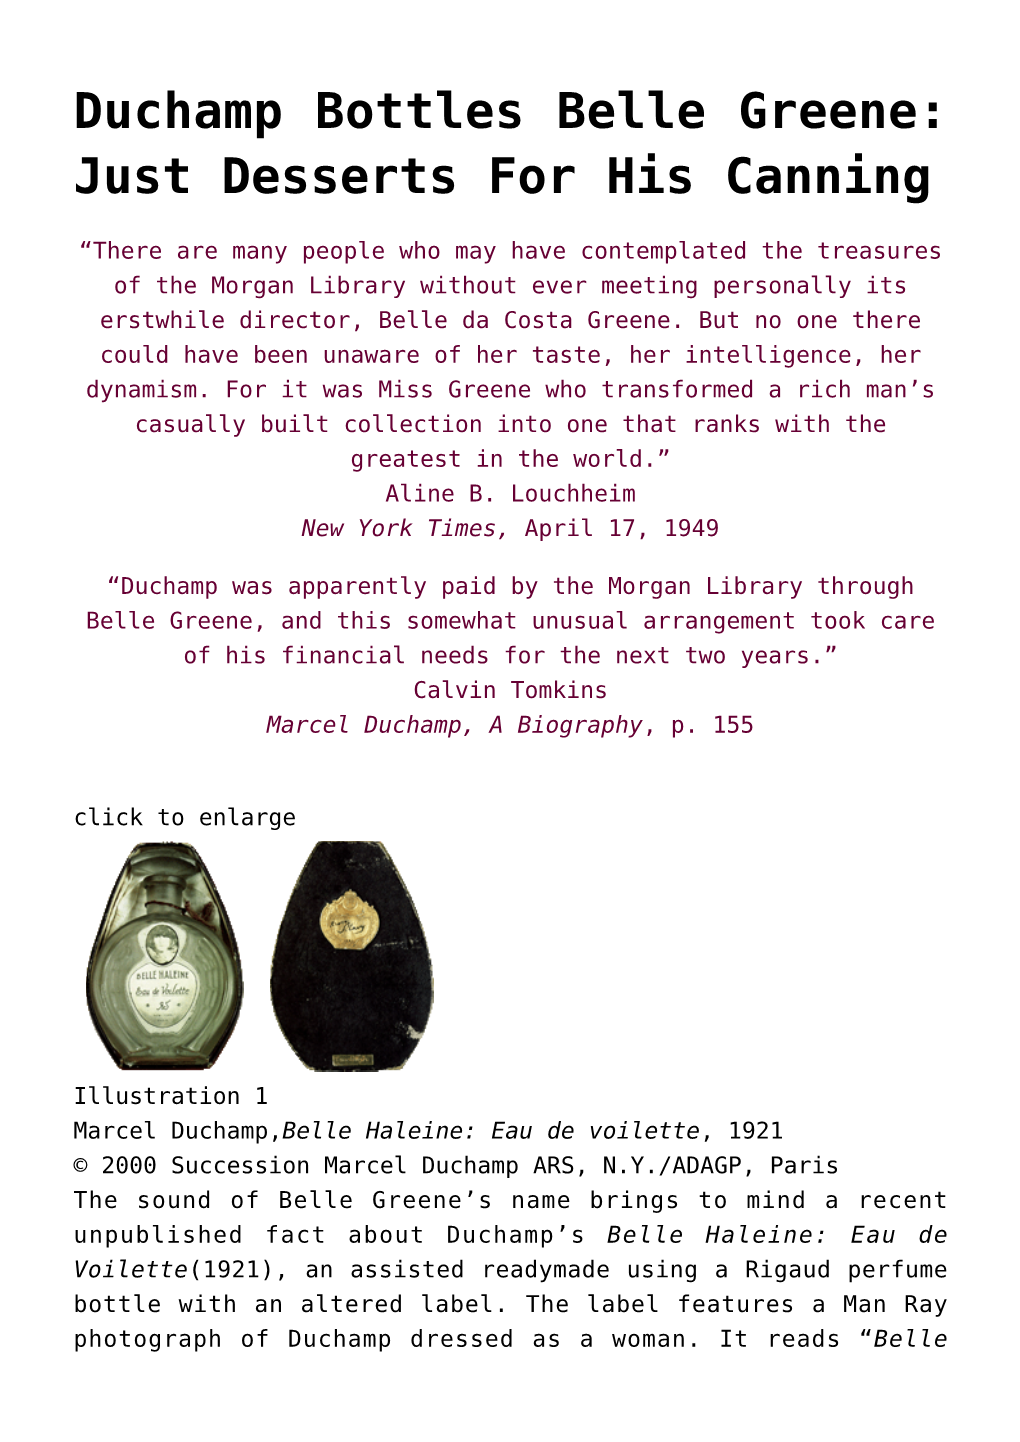 Duchamp Bottles Belle Greene: Just Desserts for His Canning